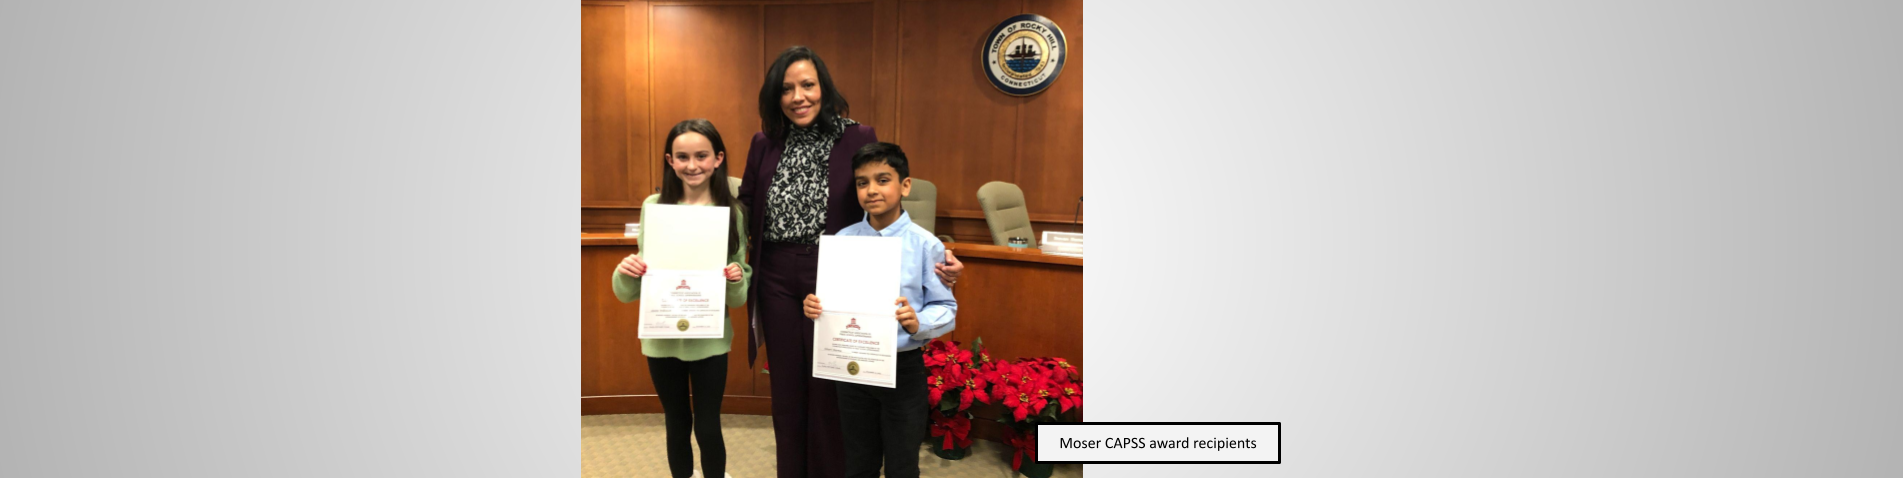 Moser CAPSS award recipients